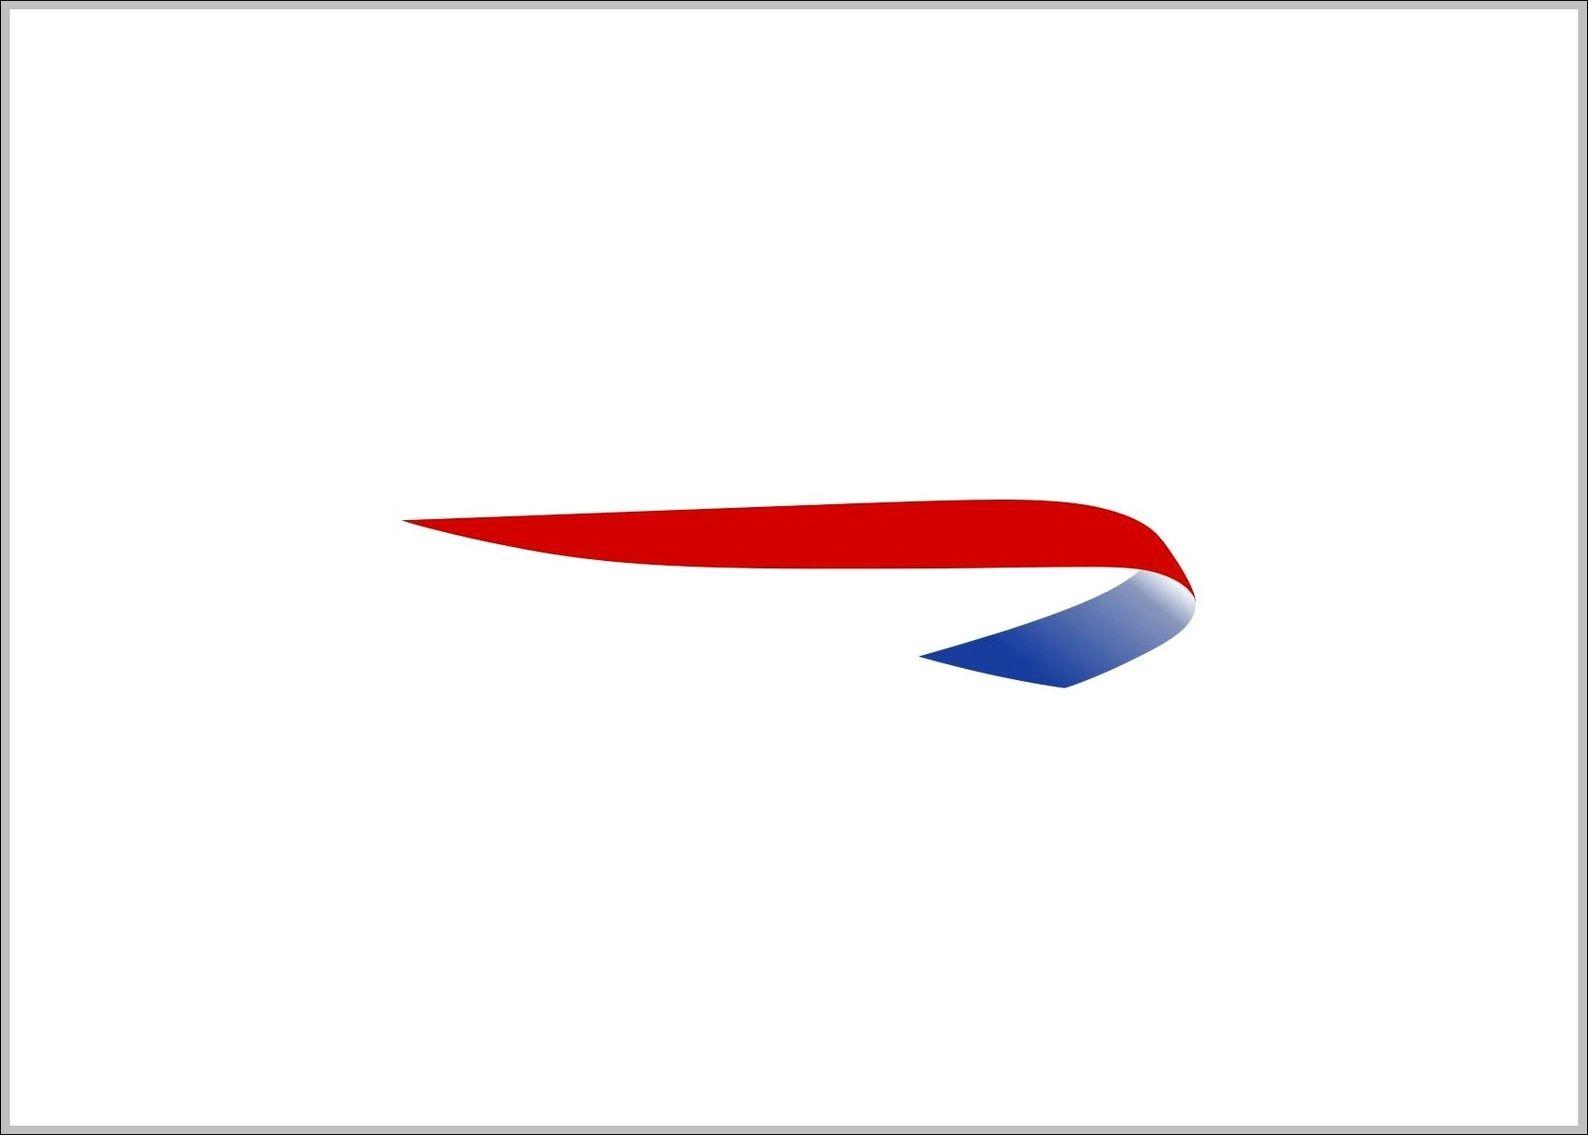 British Airways Logo - British Airways logo ribbon logo | Logo Sign - Logos, Signs, Symbols ...